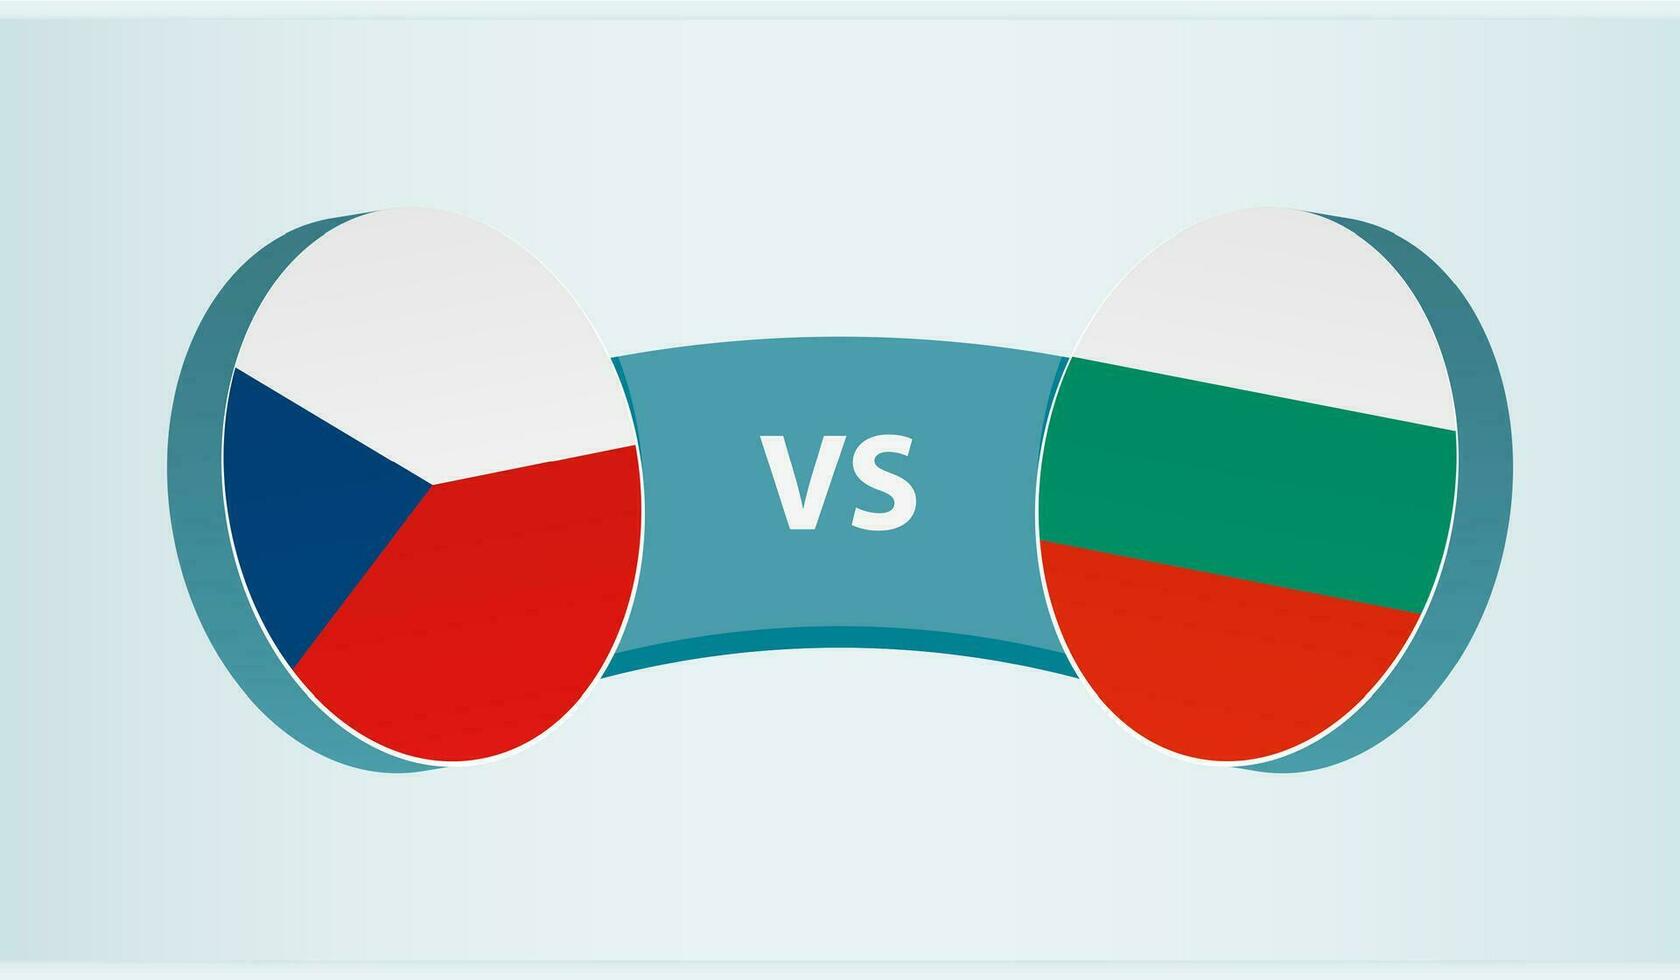 Tschechisch Republik gegen Bulgarien, Mannschaft Sport Wettbewerb Konzept. vektor